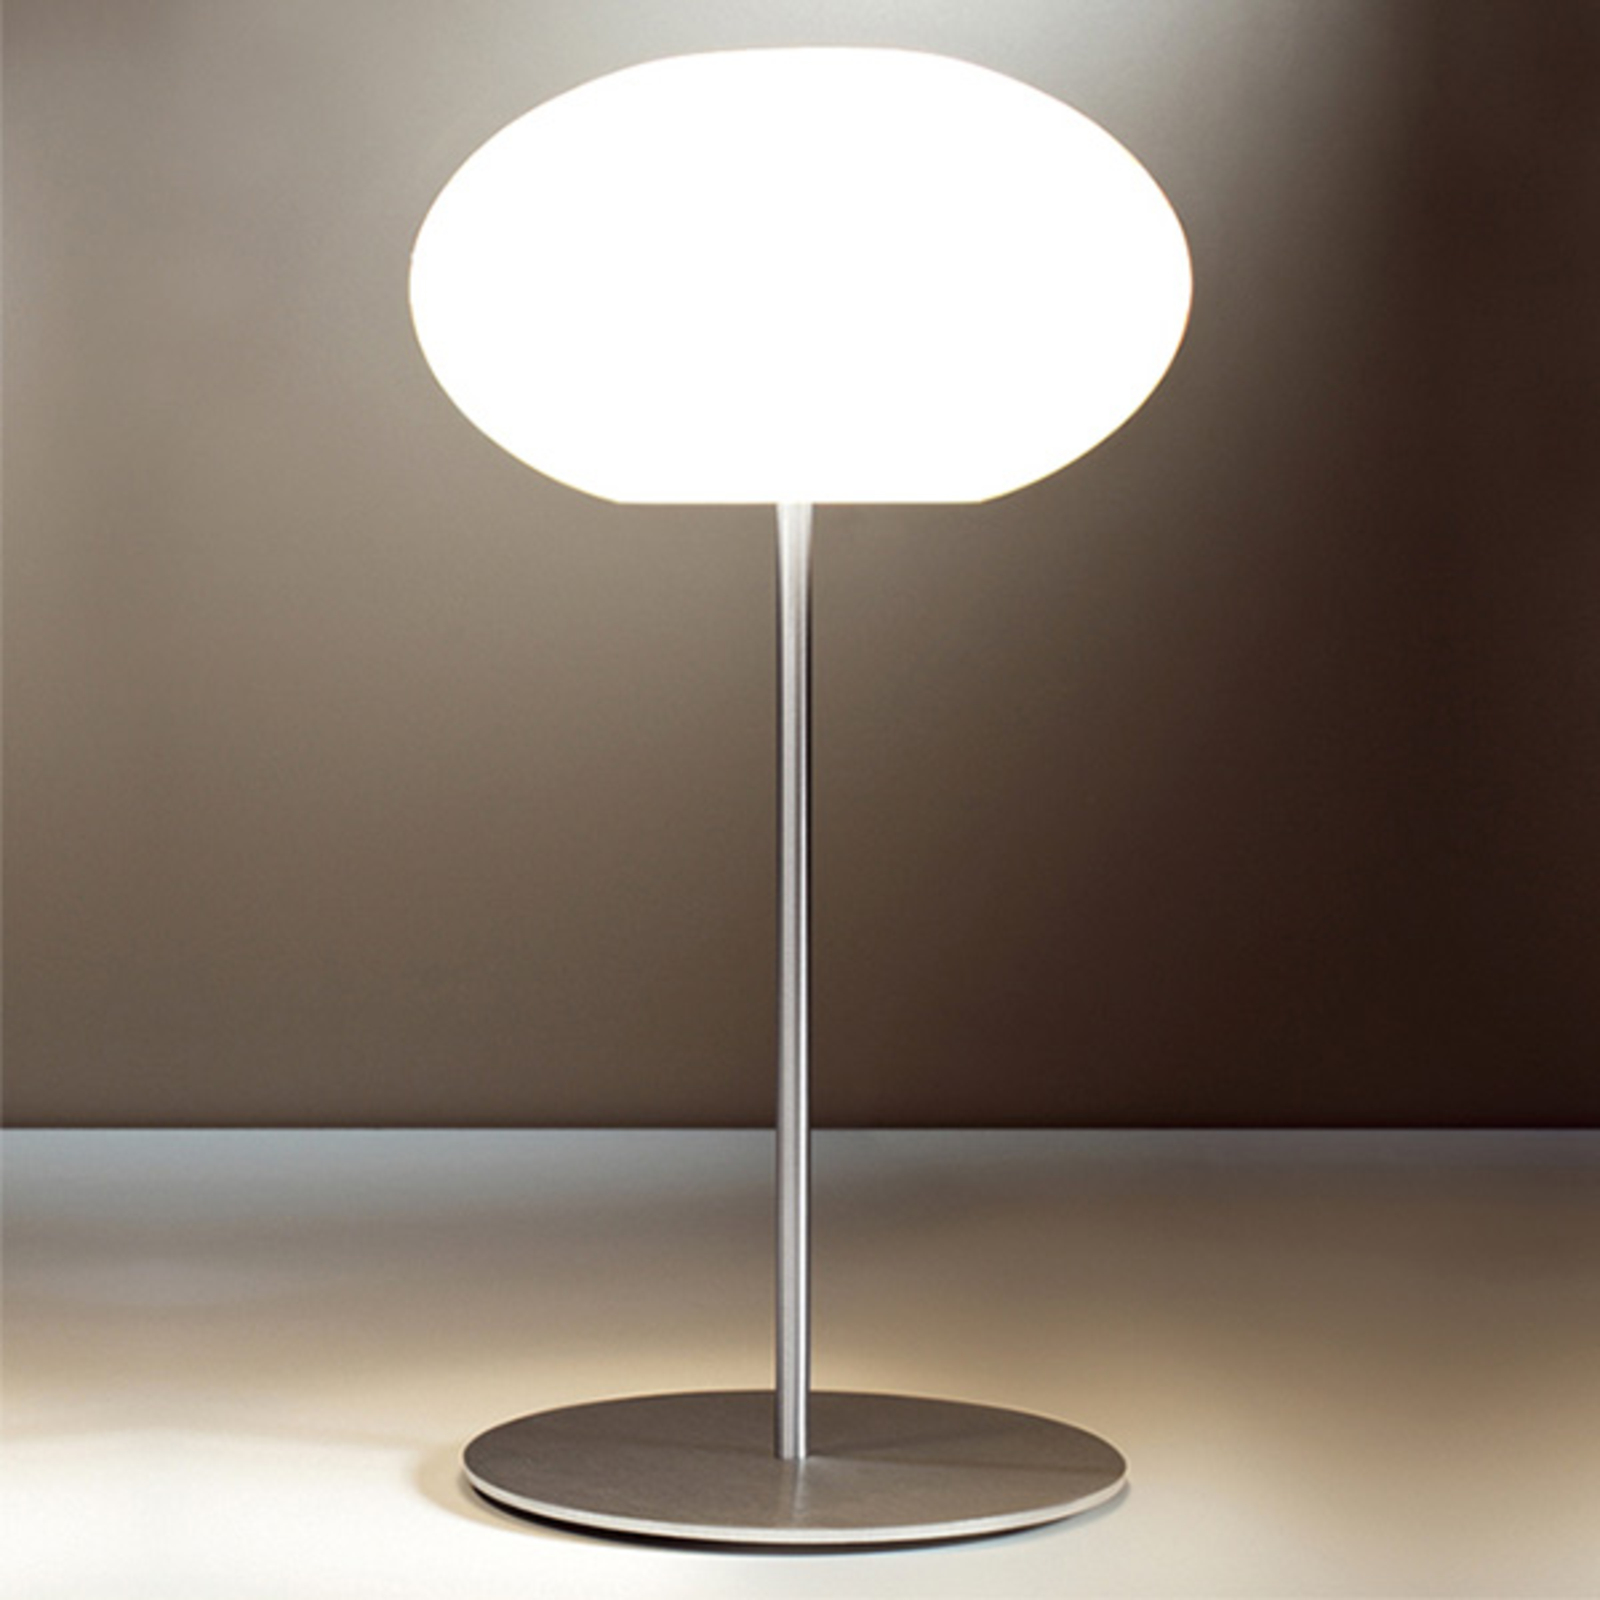 Casablanca Aih bordlampe, Ø 28 cm, blank hvid